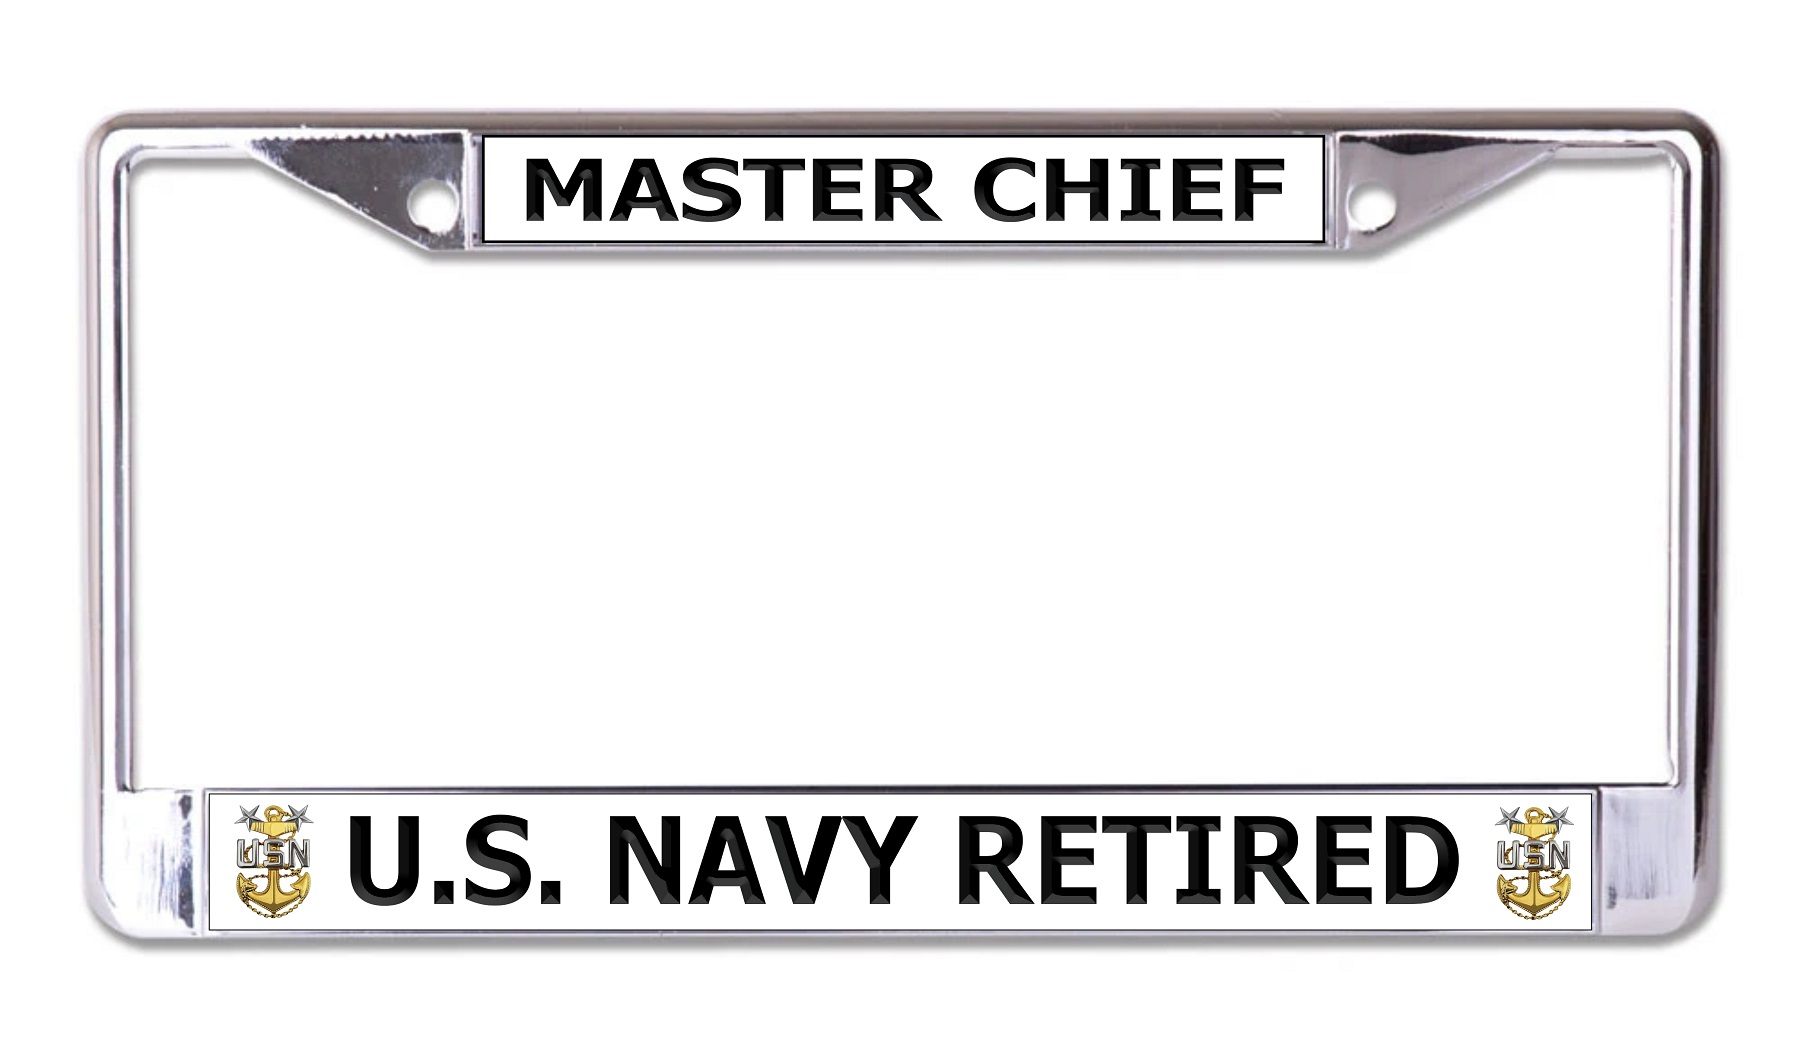 U.S. Navy Master Chief Retired #3 Chrome License Plate FRAME